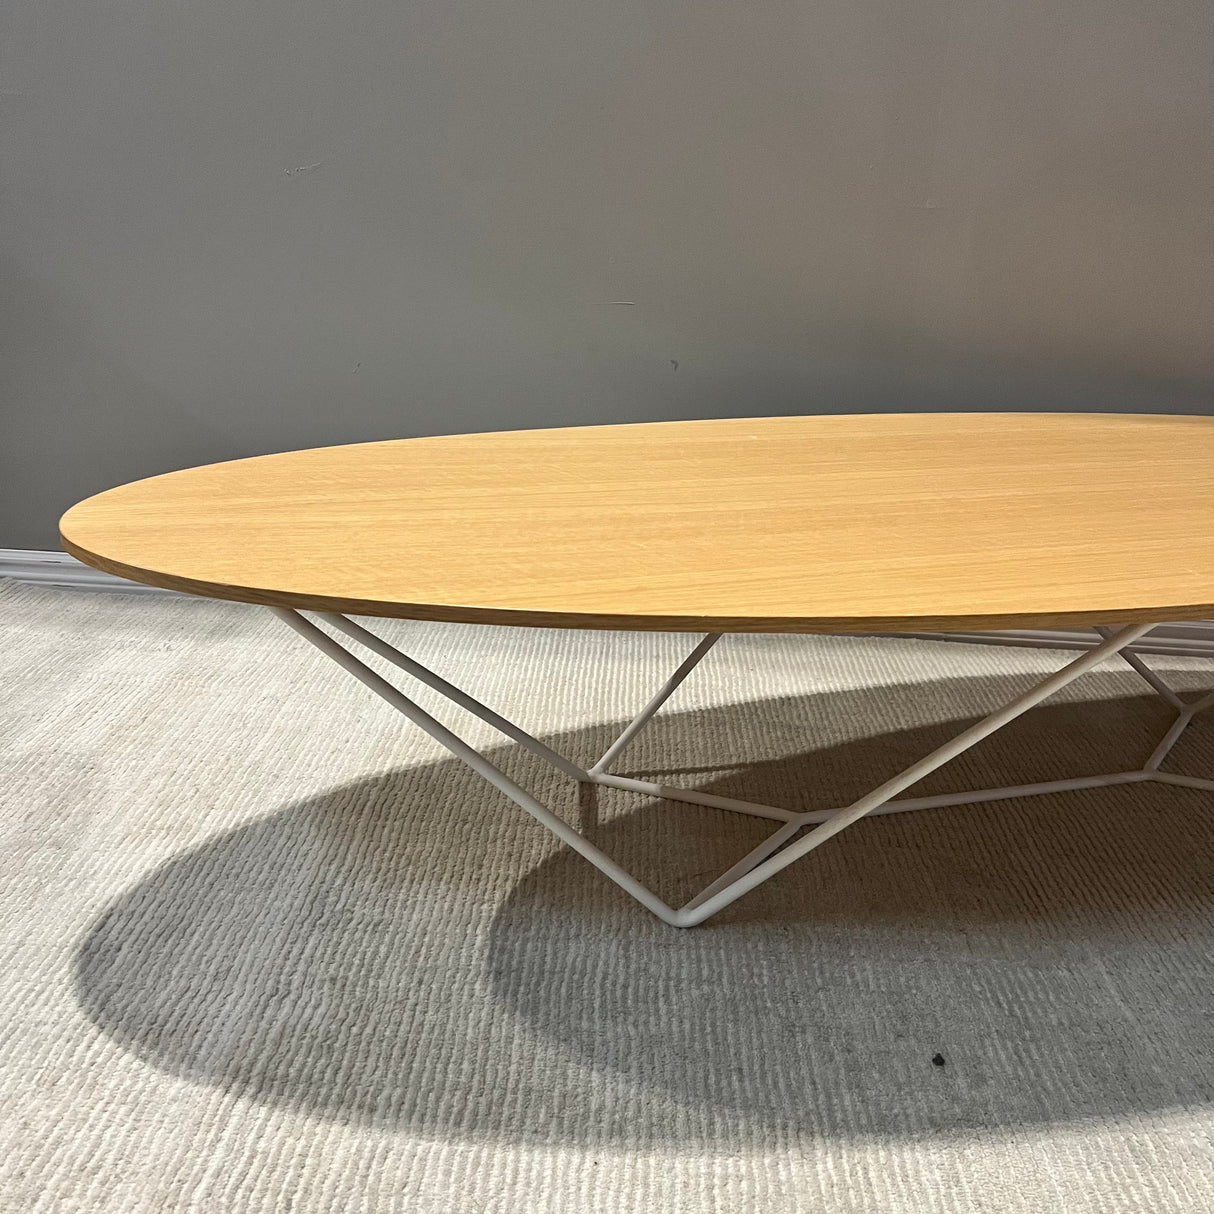 Davis Furniture Oval Stem Coffee table